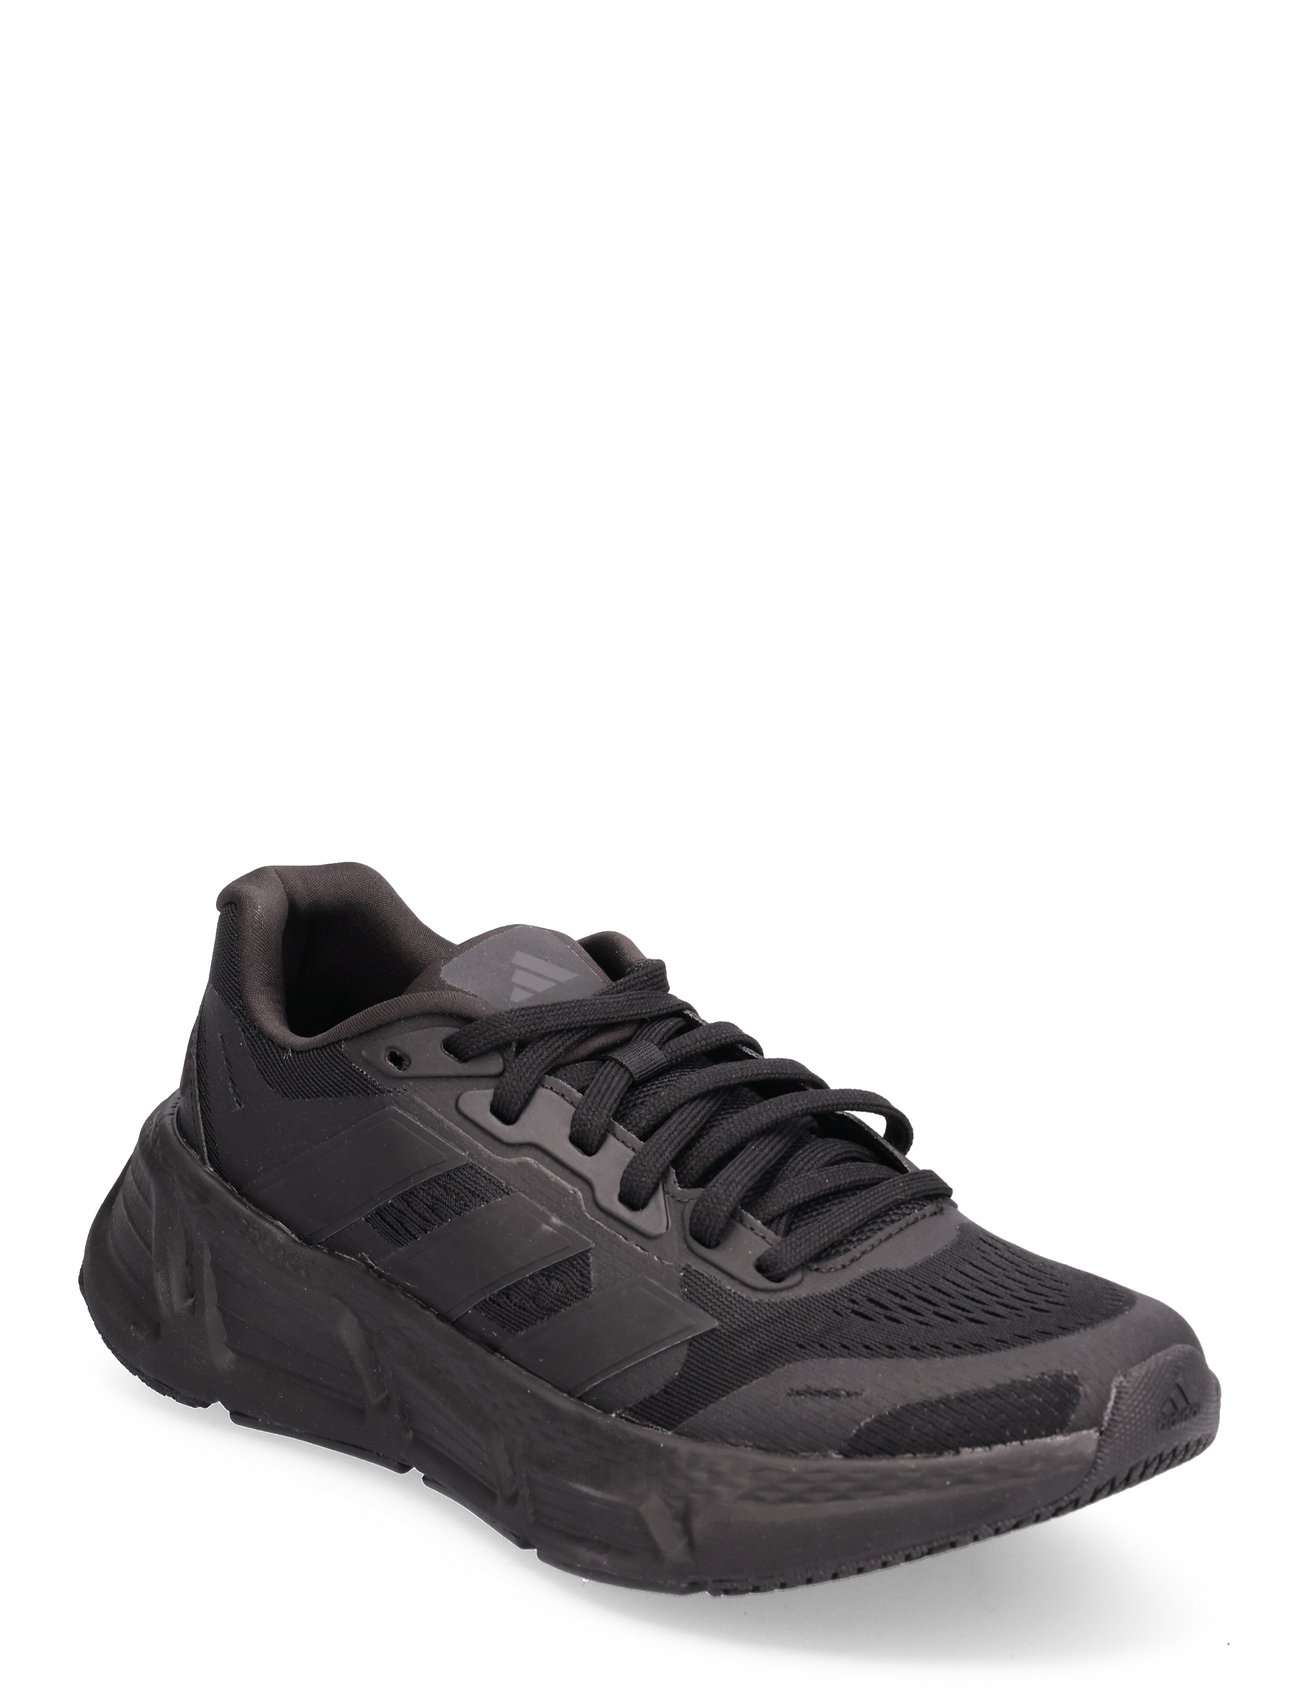 Questar 2 W Sport Sport Shoes Running Shoes Black Adidas Performance